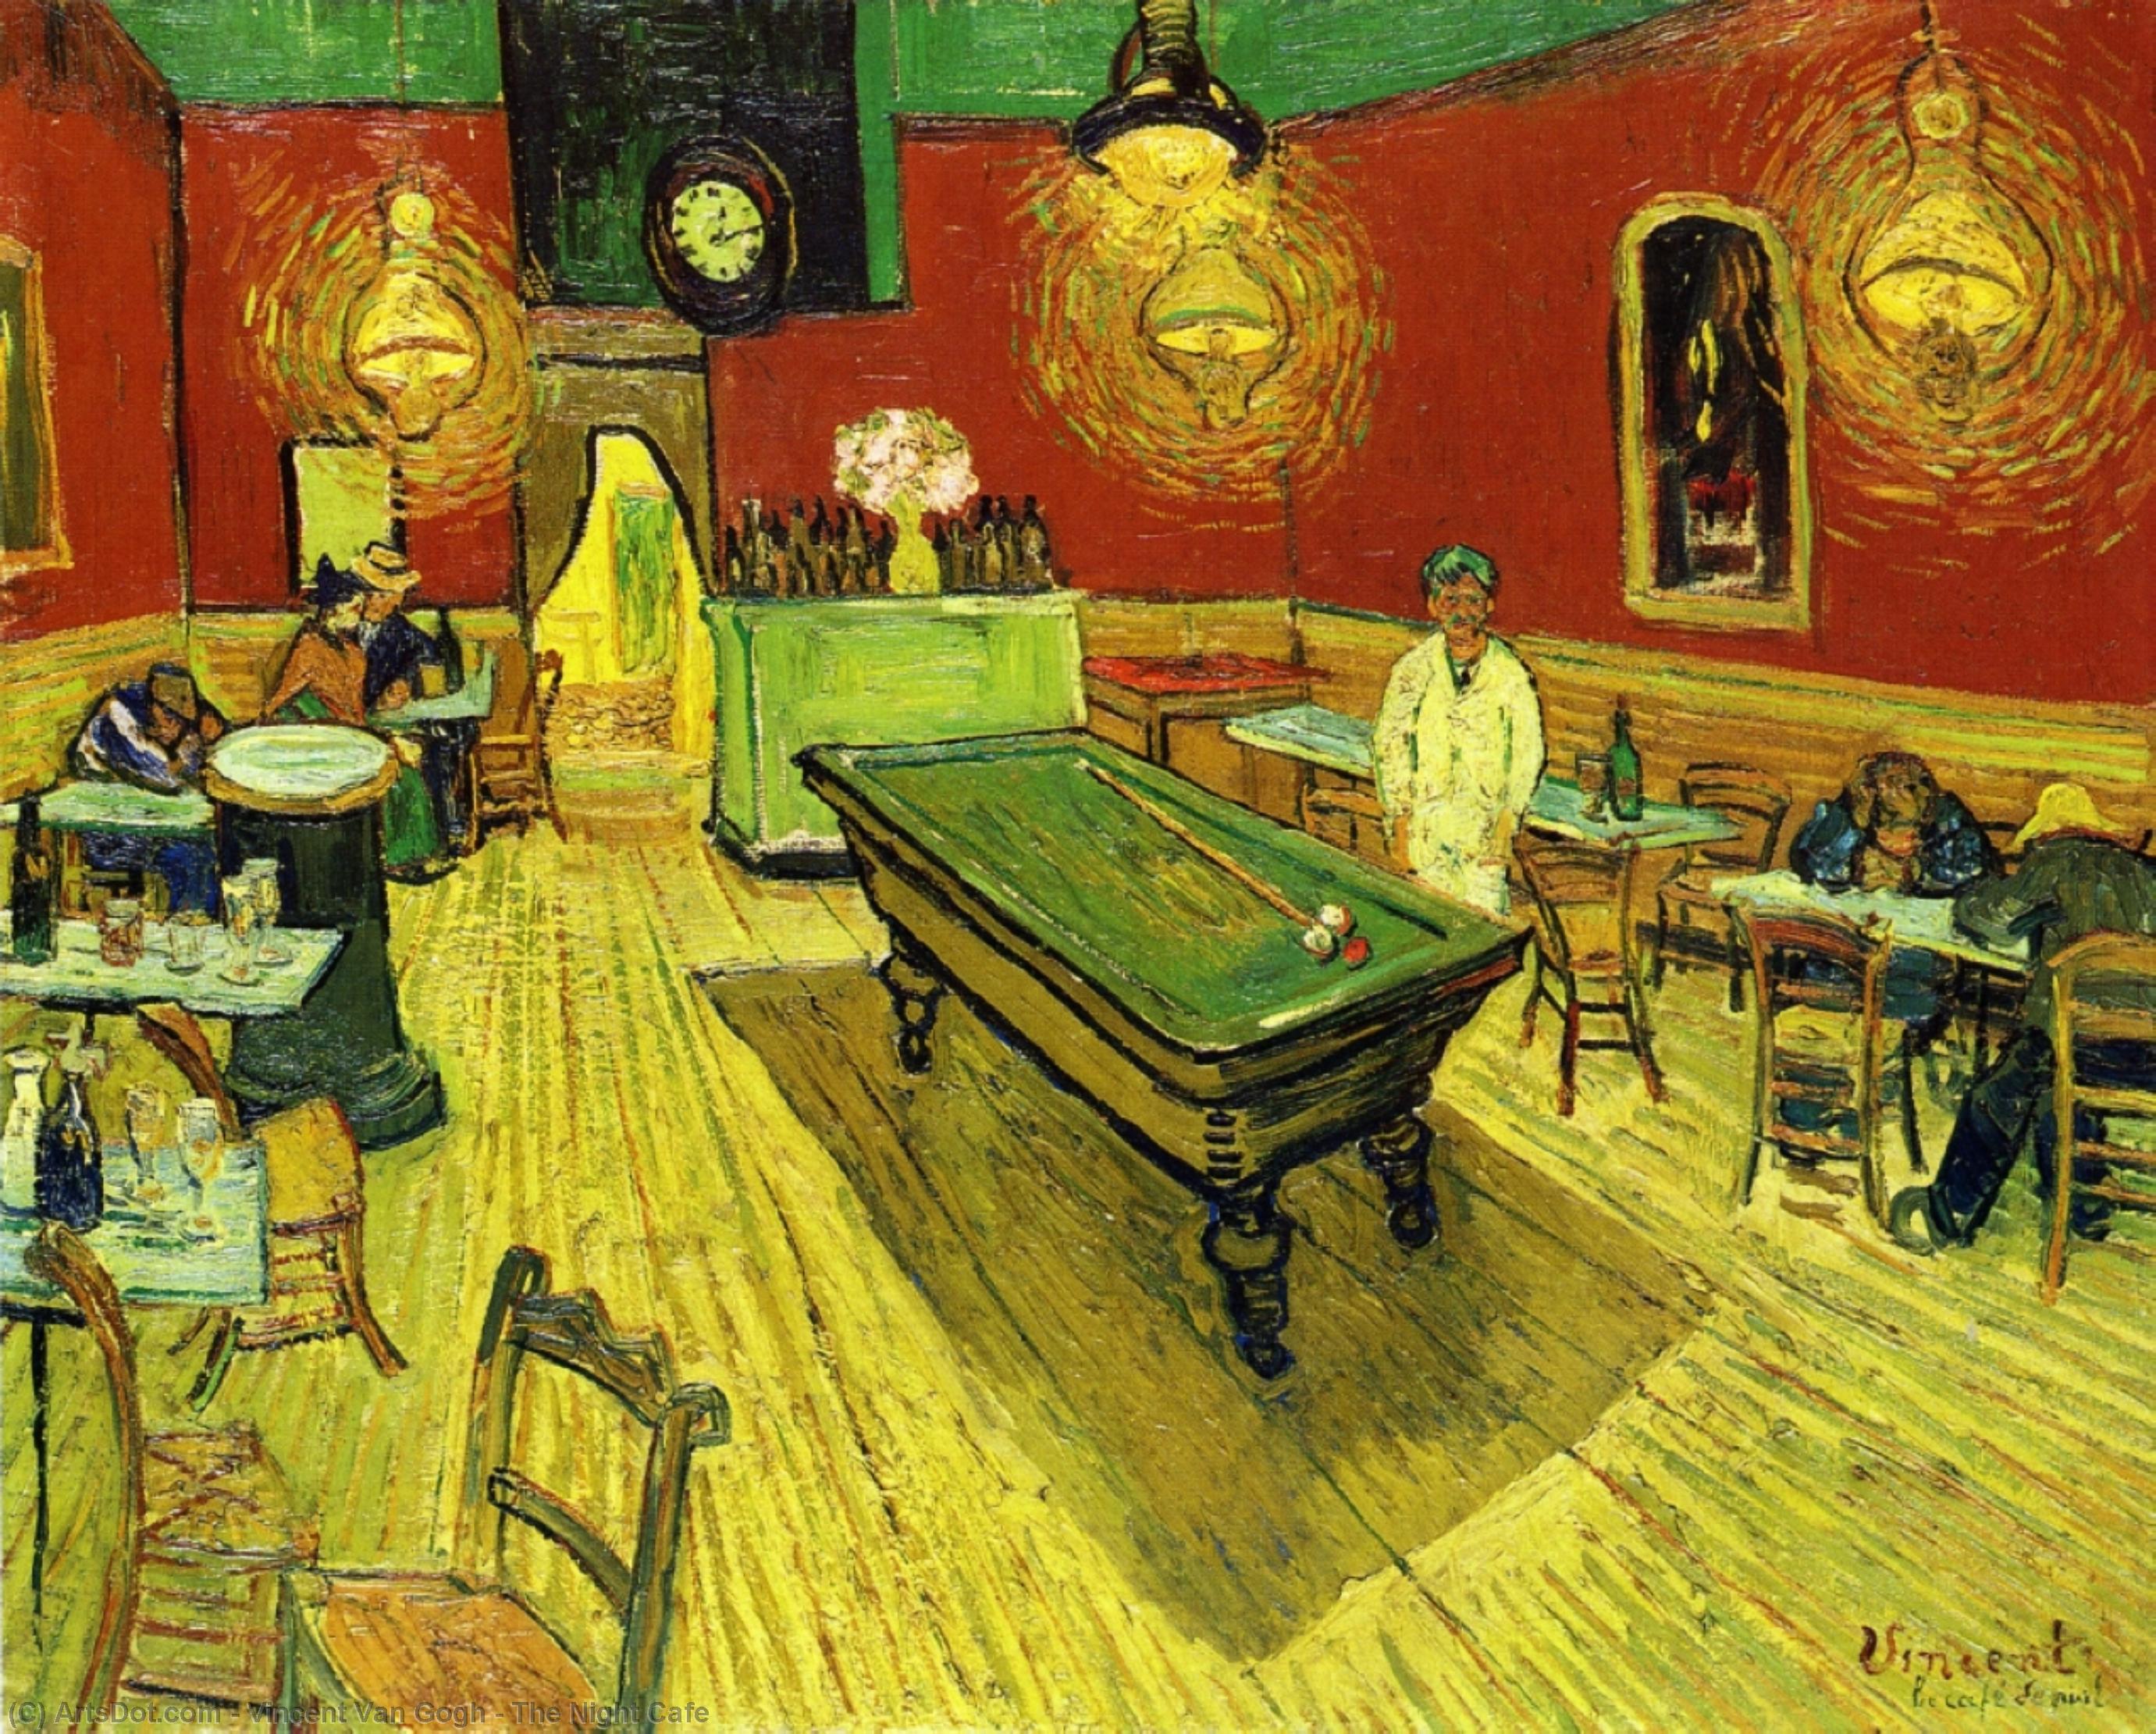 Achat Reproductions De Peintures The Night Cafe, 1888 de Vincent Van Gogh (1853-1890, Netherlands) | ArtsDot.com